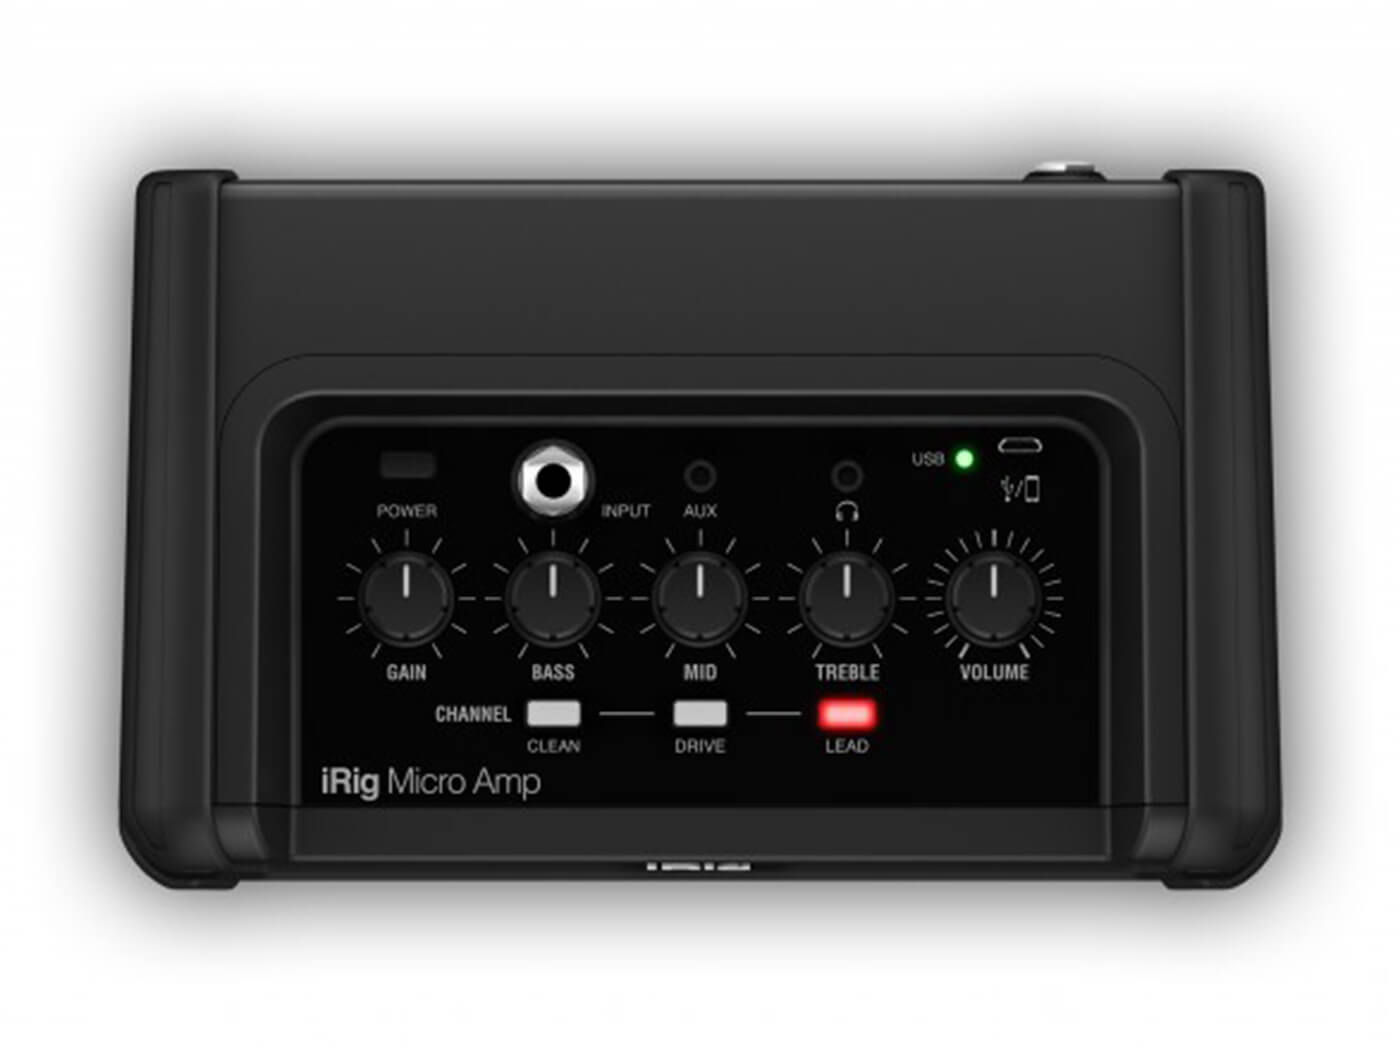 IK Multimedia iRig Micro Amp top controls